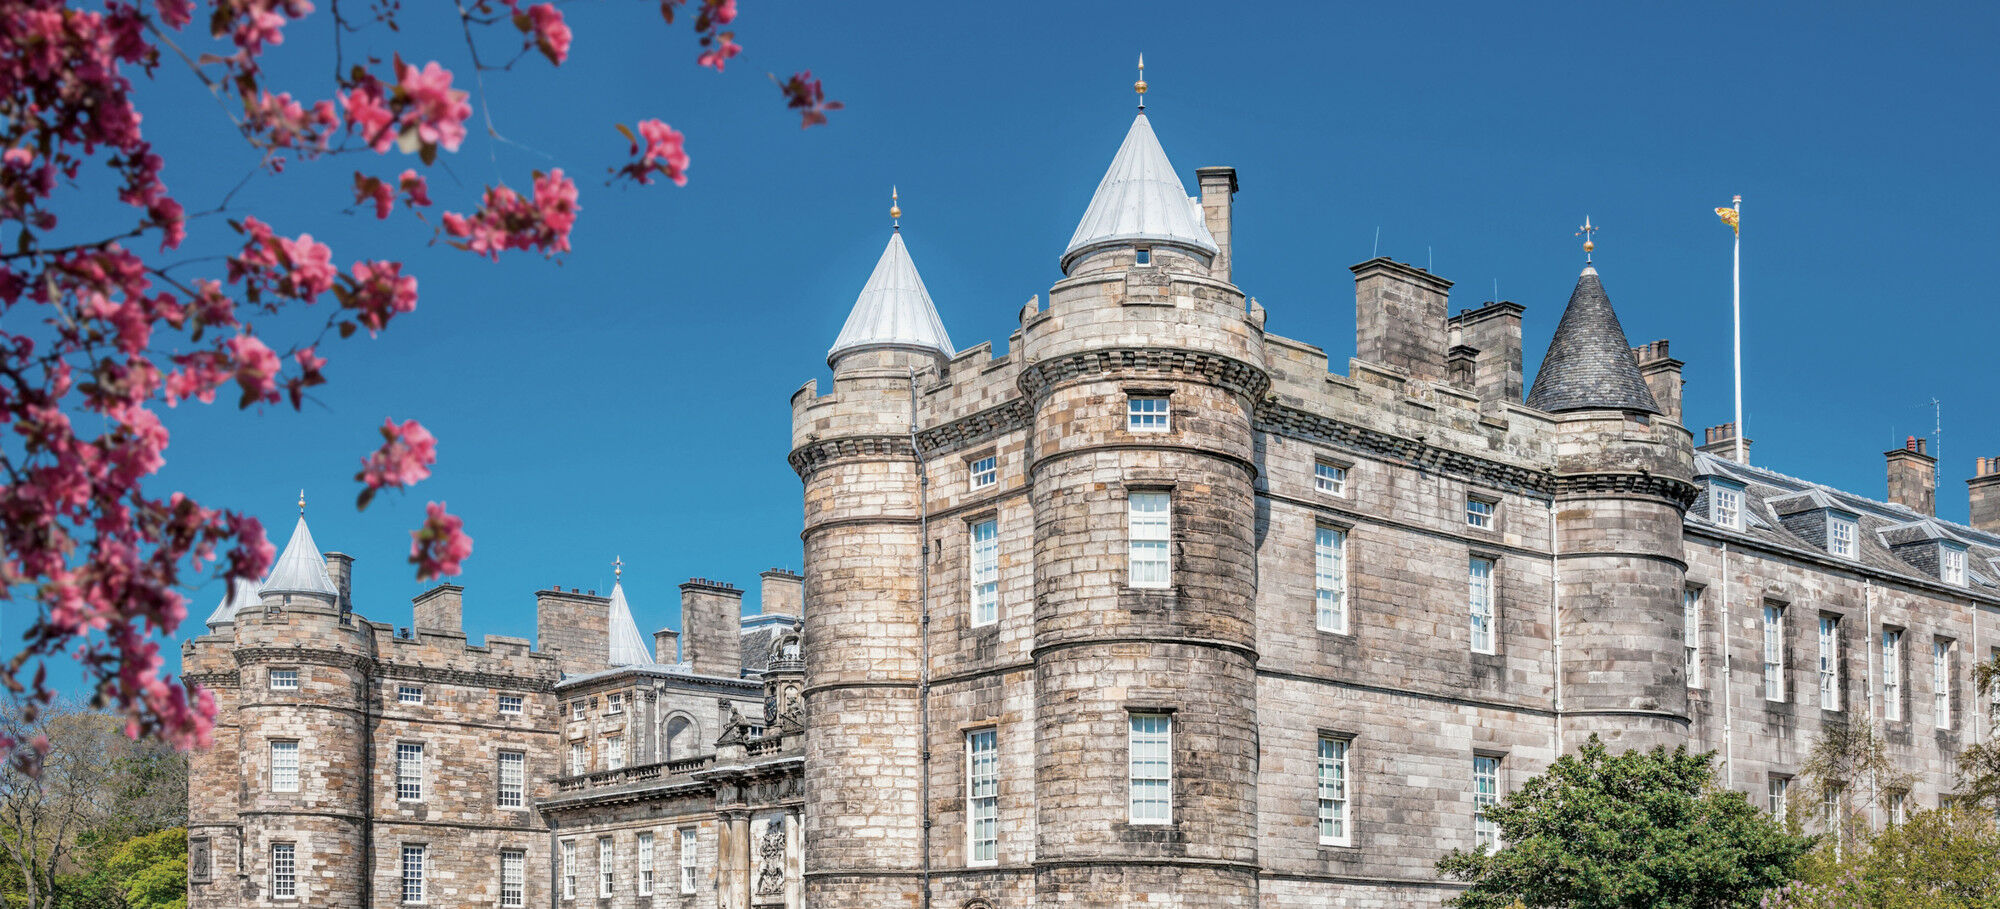 Edinburgh – Very Royal